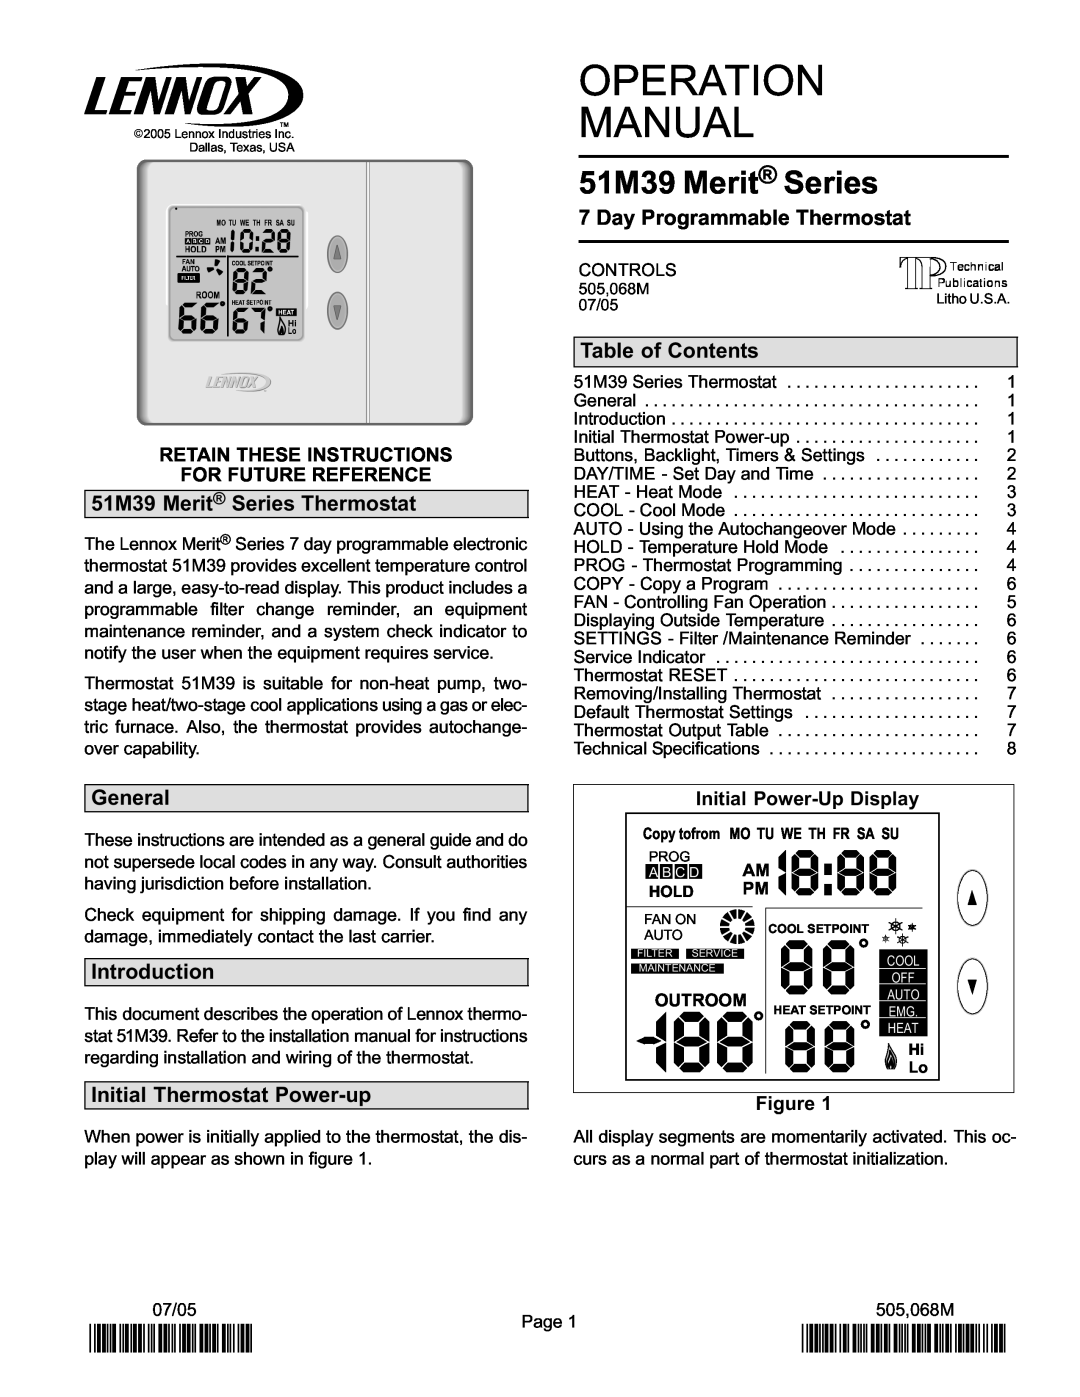 Lennox International Inc 51M37 Pm, 2P0705, P505068M, 51M39 Merit Series Thermostat, Day Programmable Thermostat 